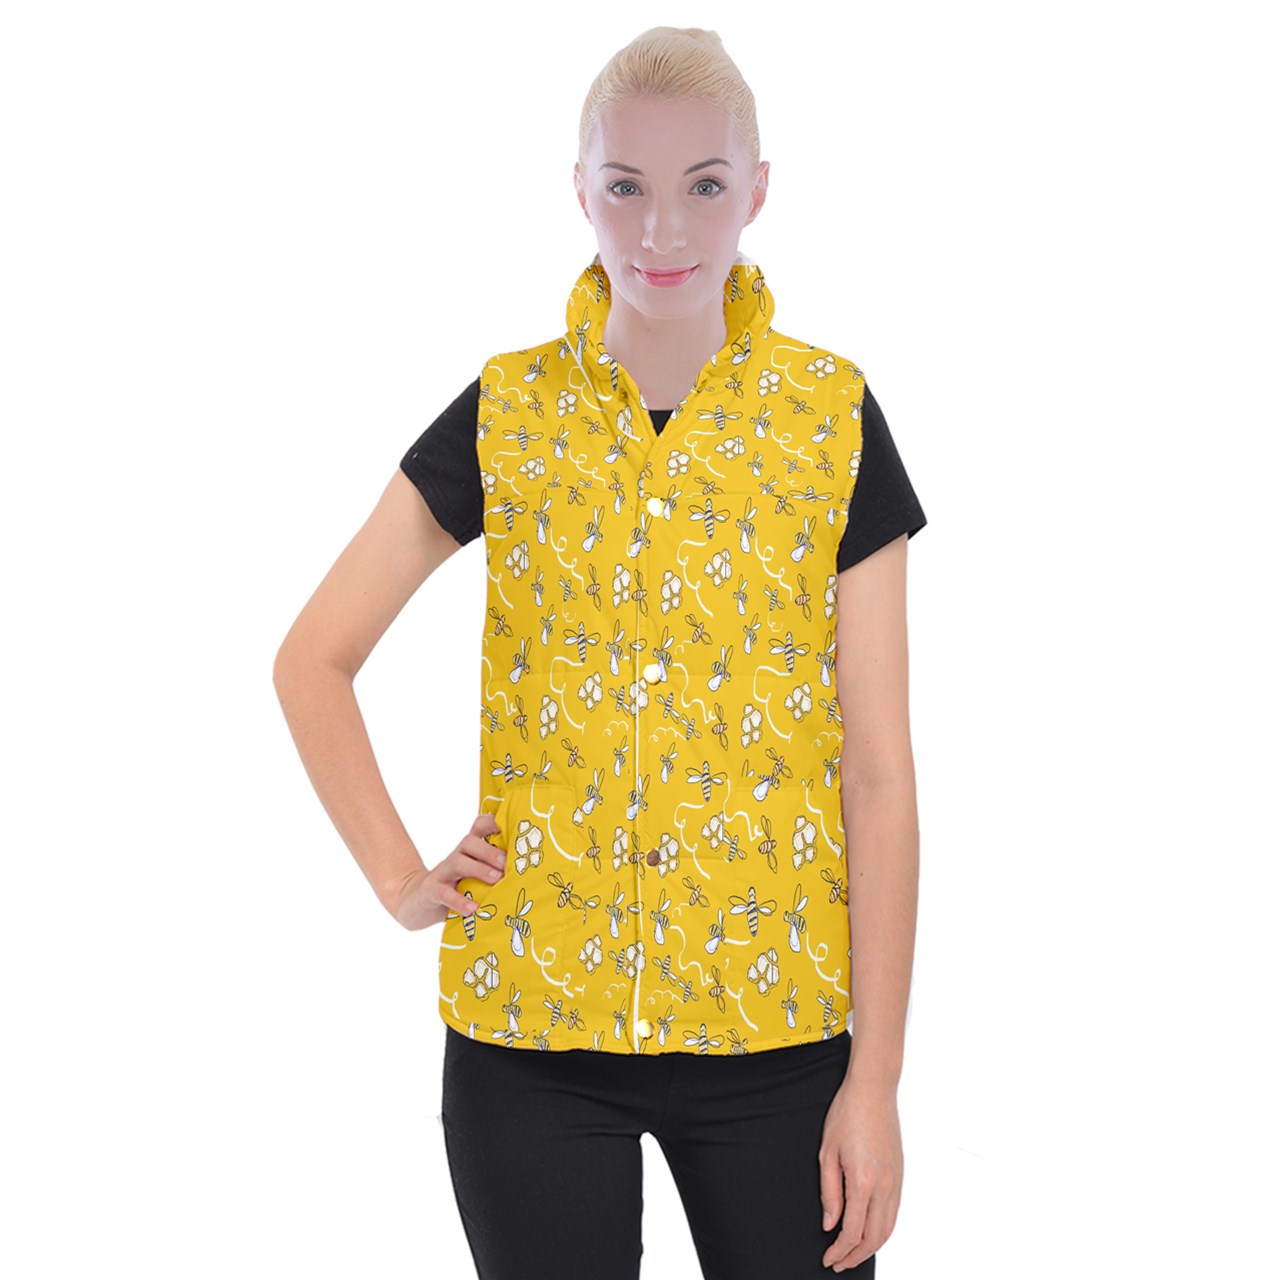 Honeybees Women's Button Up Vest